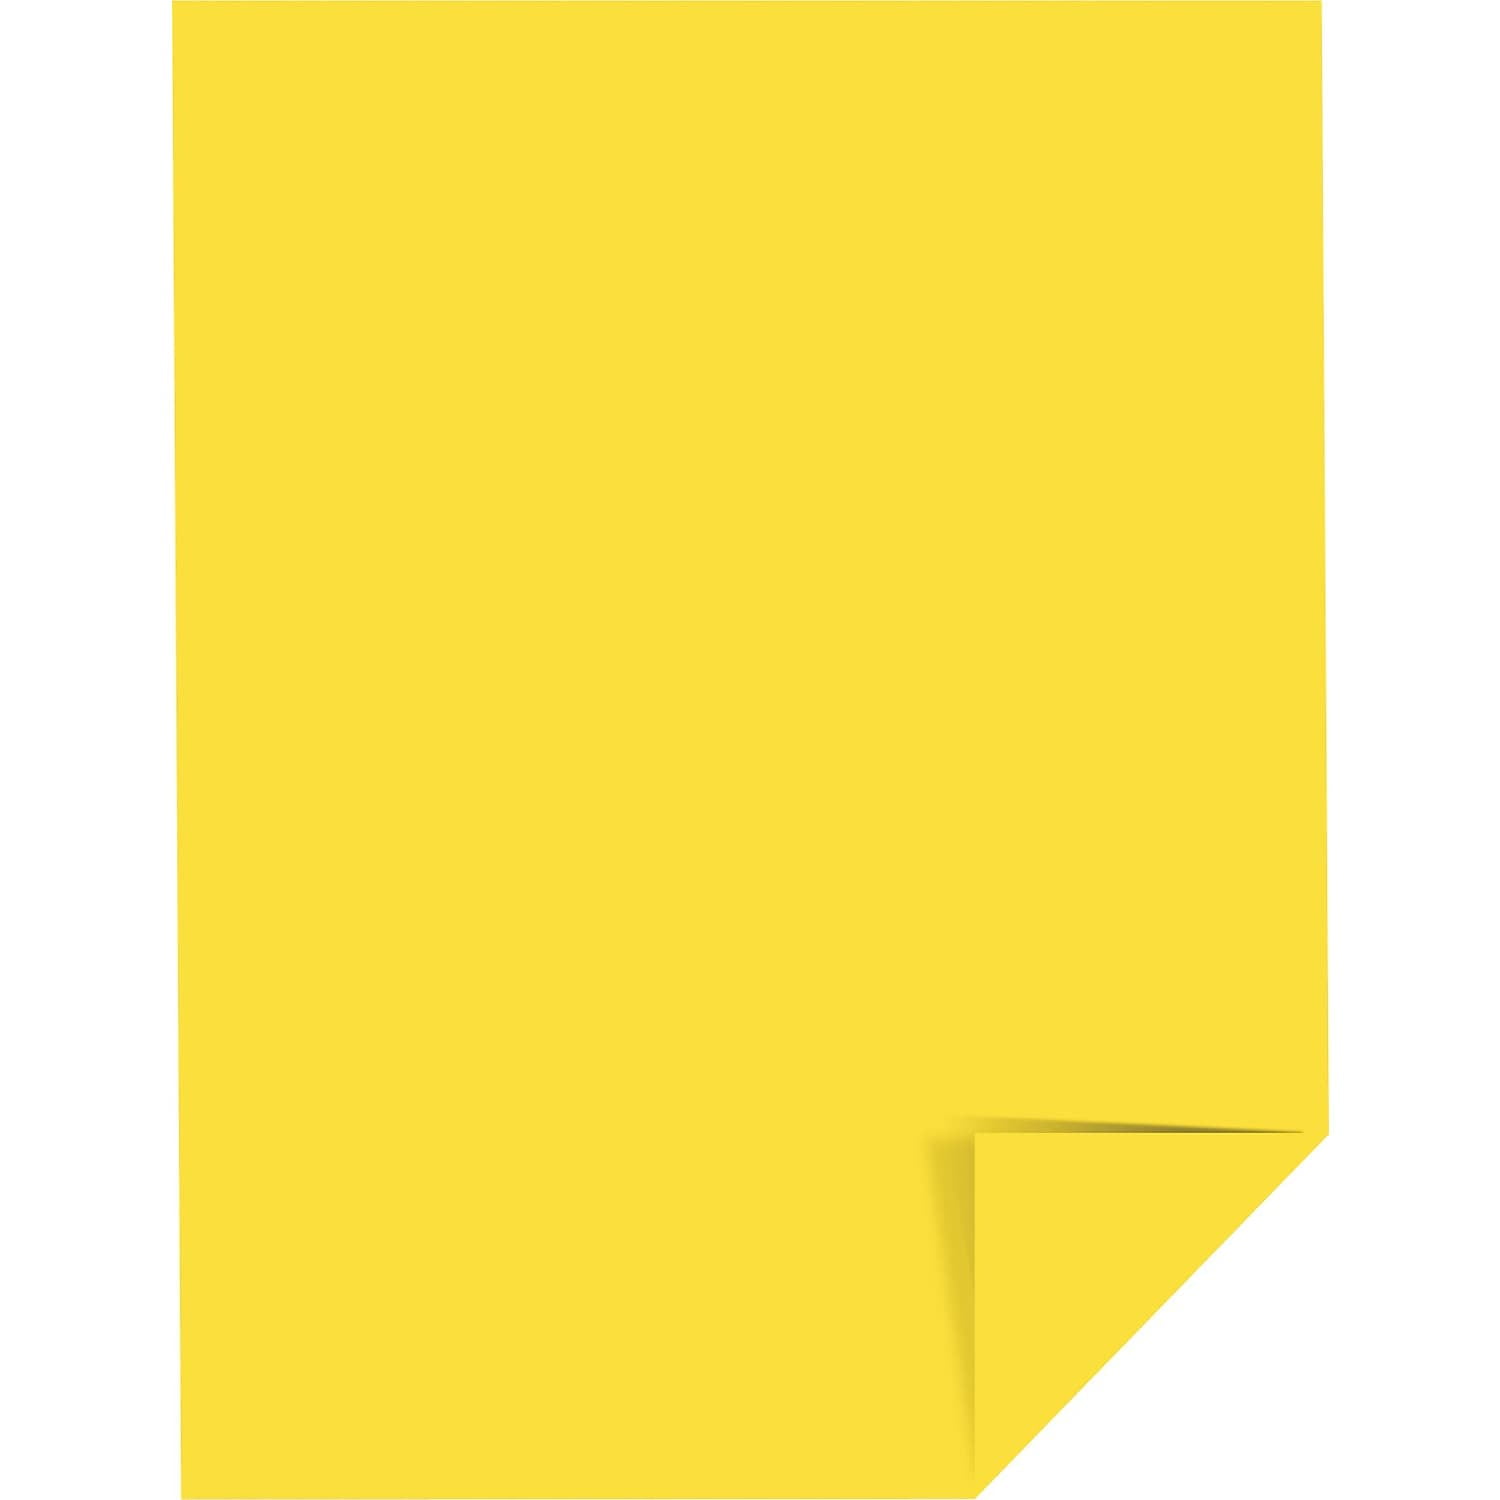 Sunburst Yellow Paper - 8 1/2 x 11 60lb Text - LCI Paper